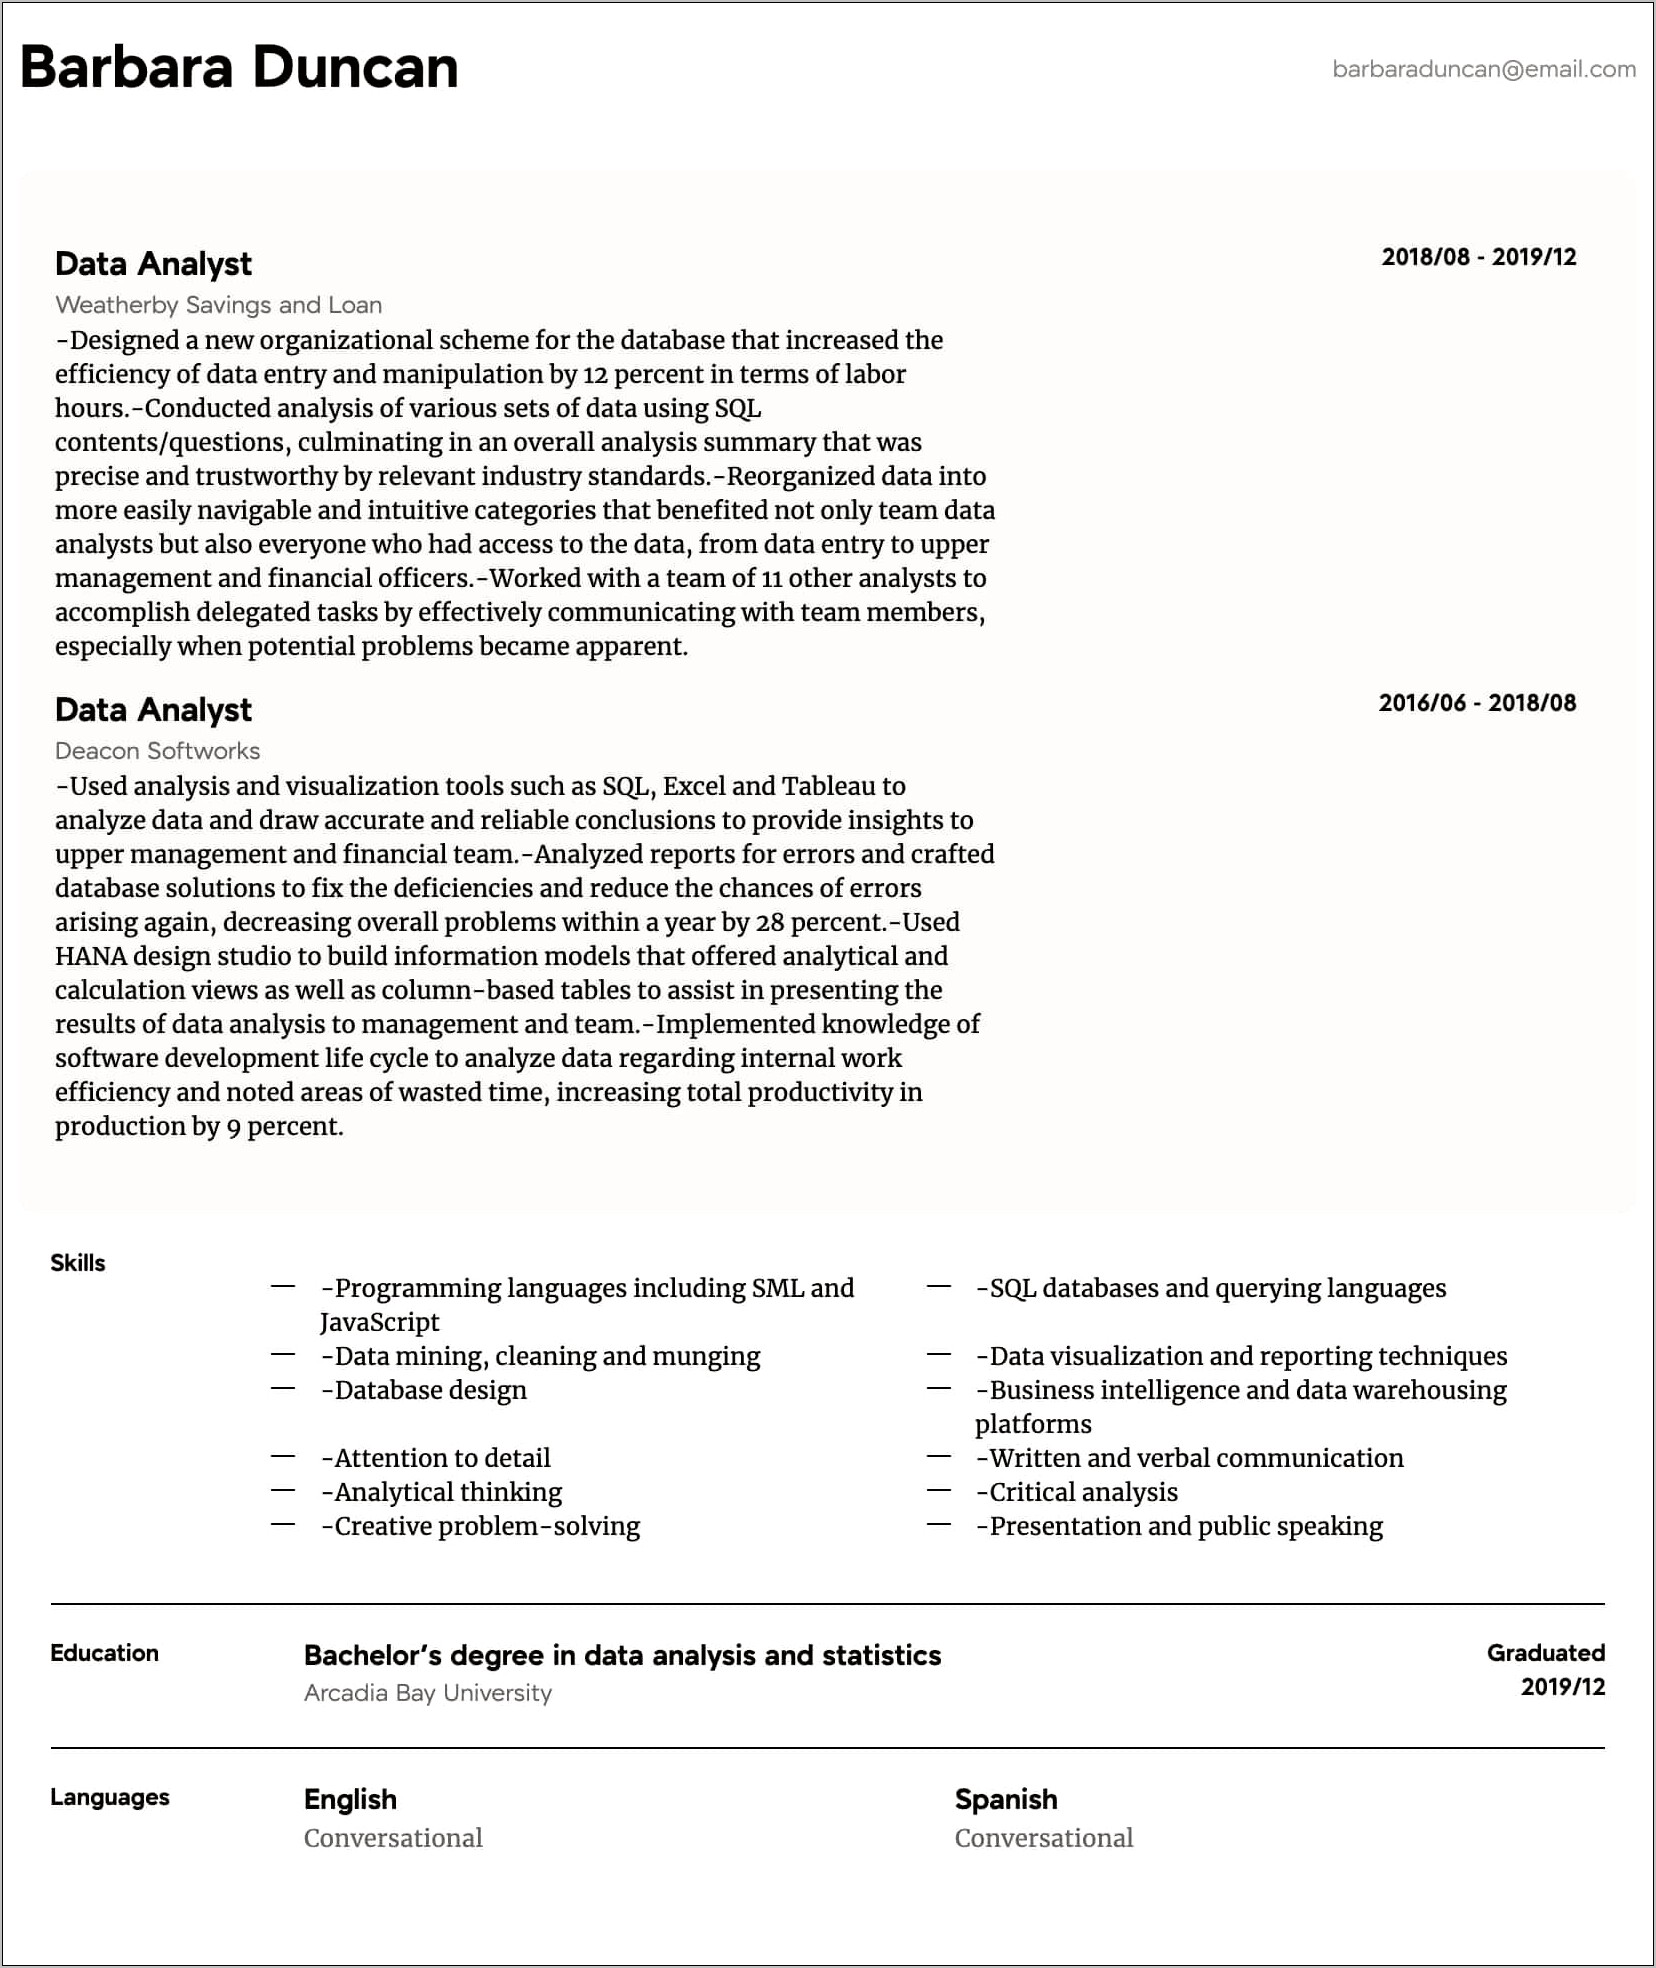 Business Intelligence Data Warehousing Sample Resume